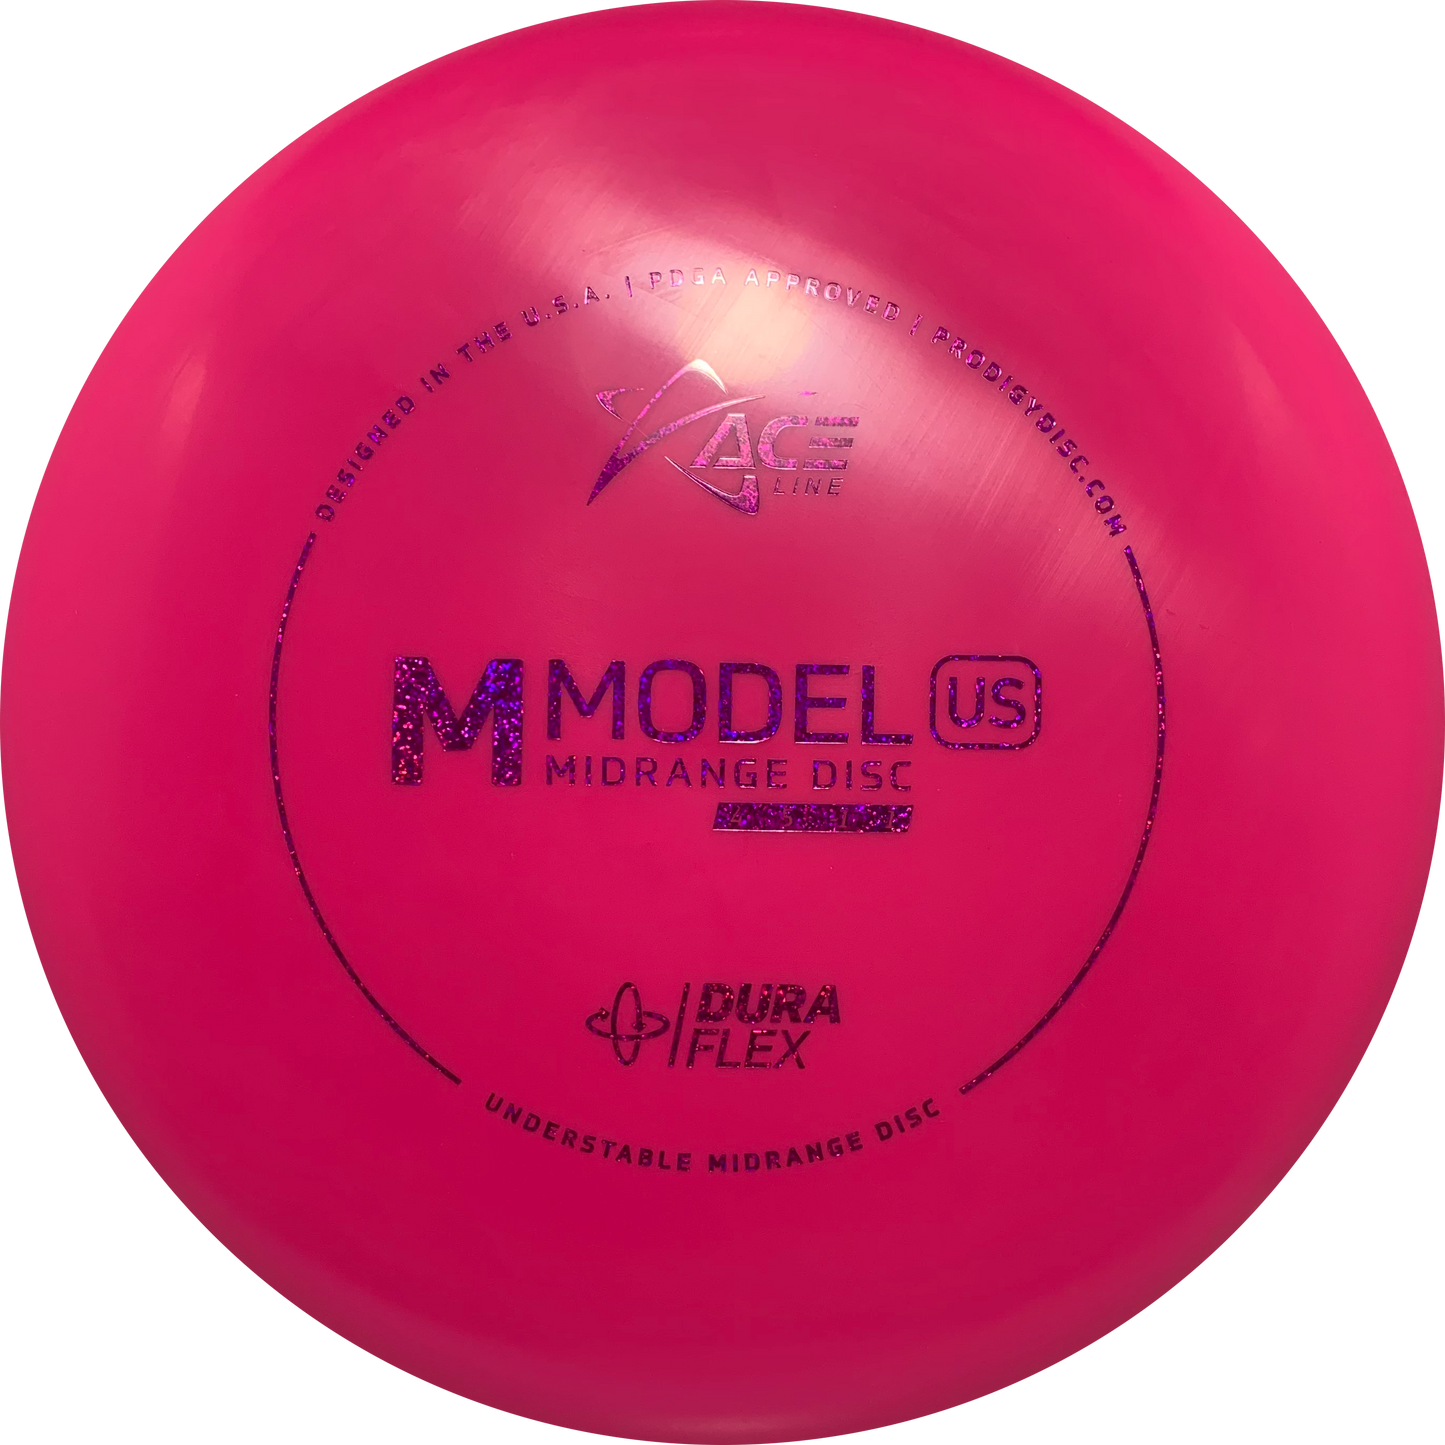 M Model US - DuraFlex